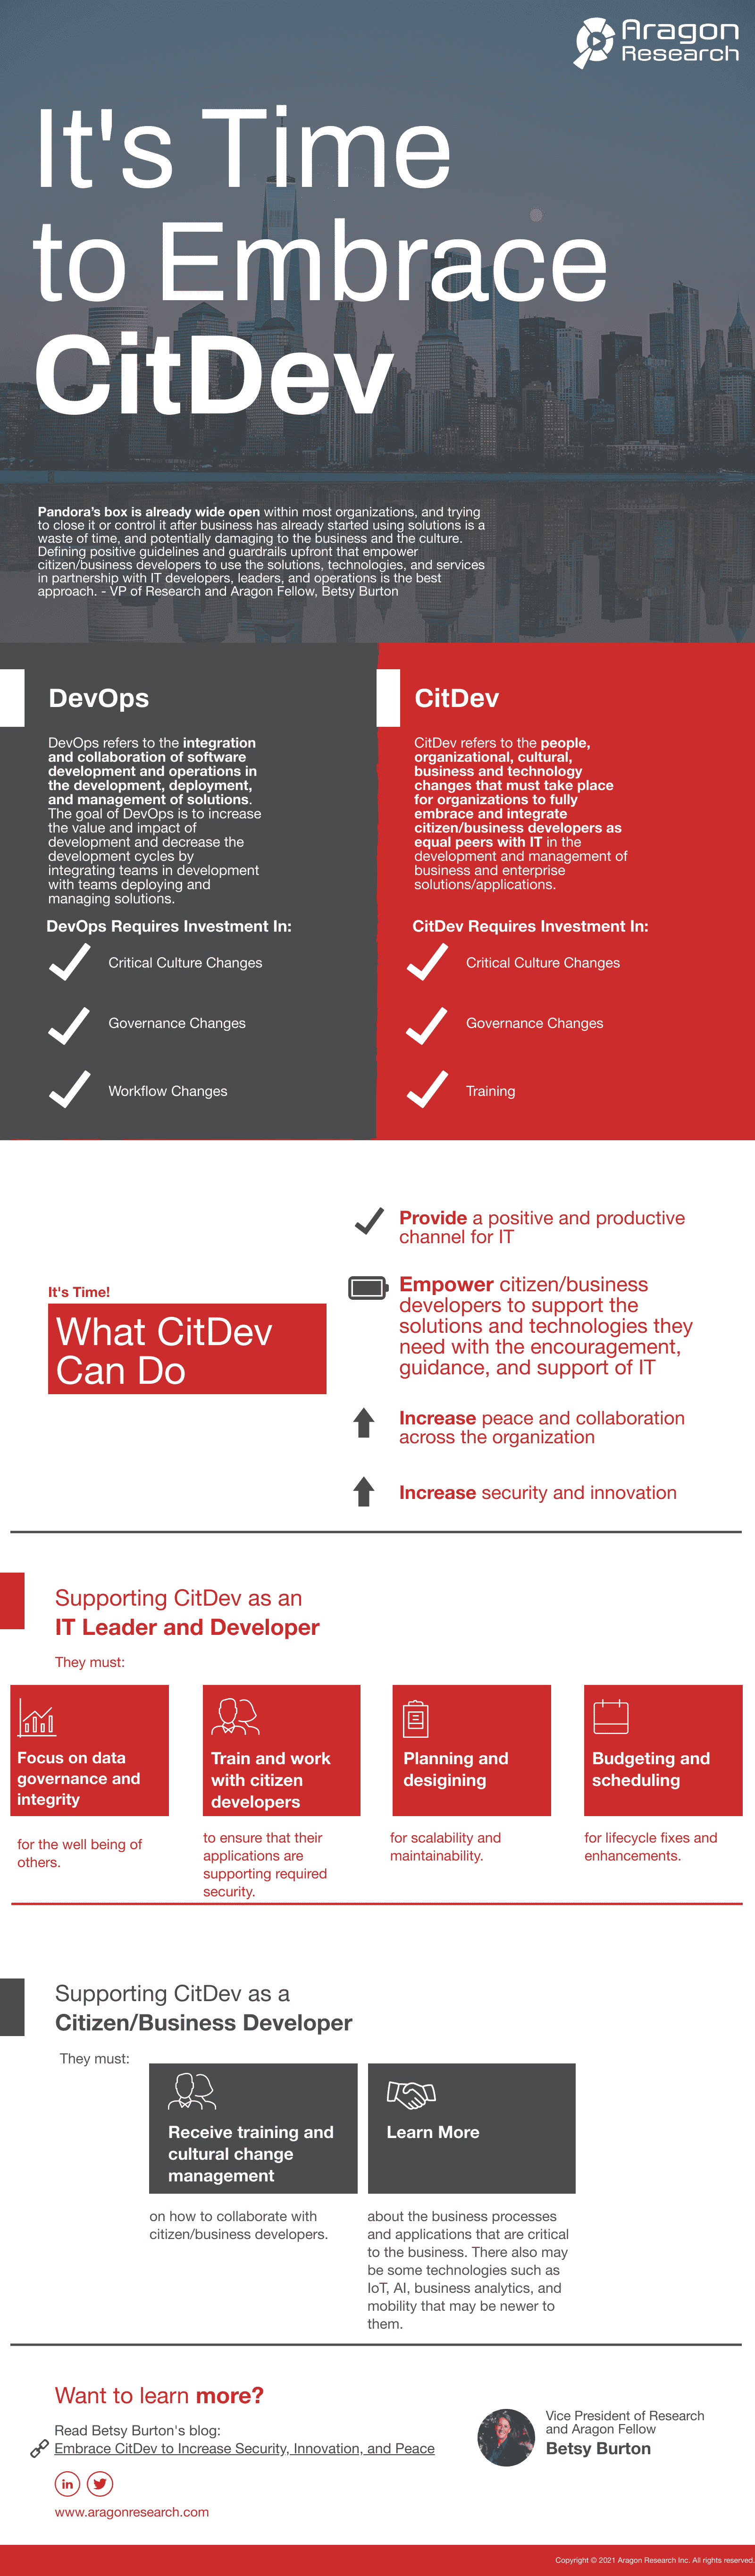 CitDev Infographic